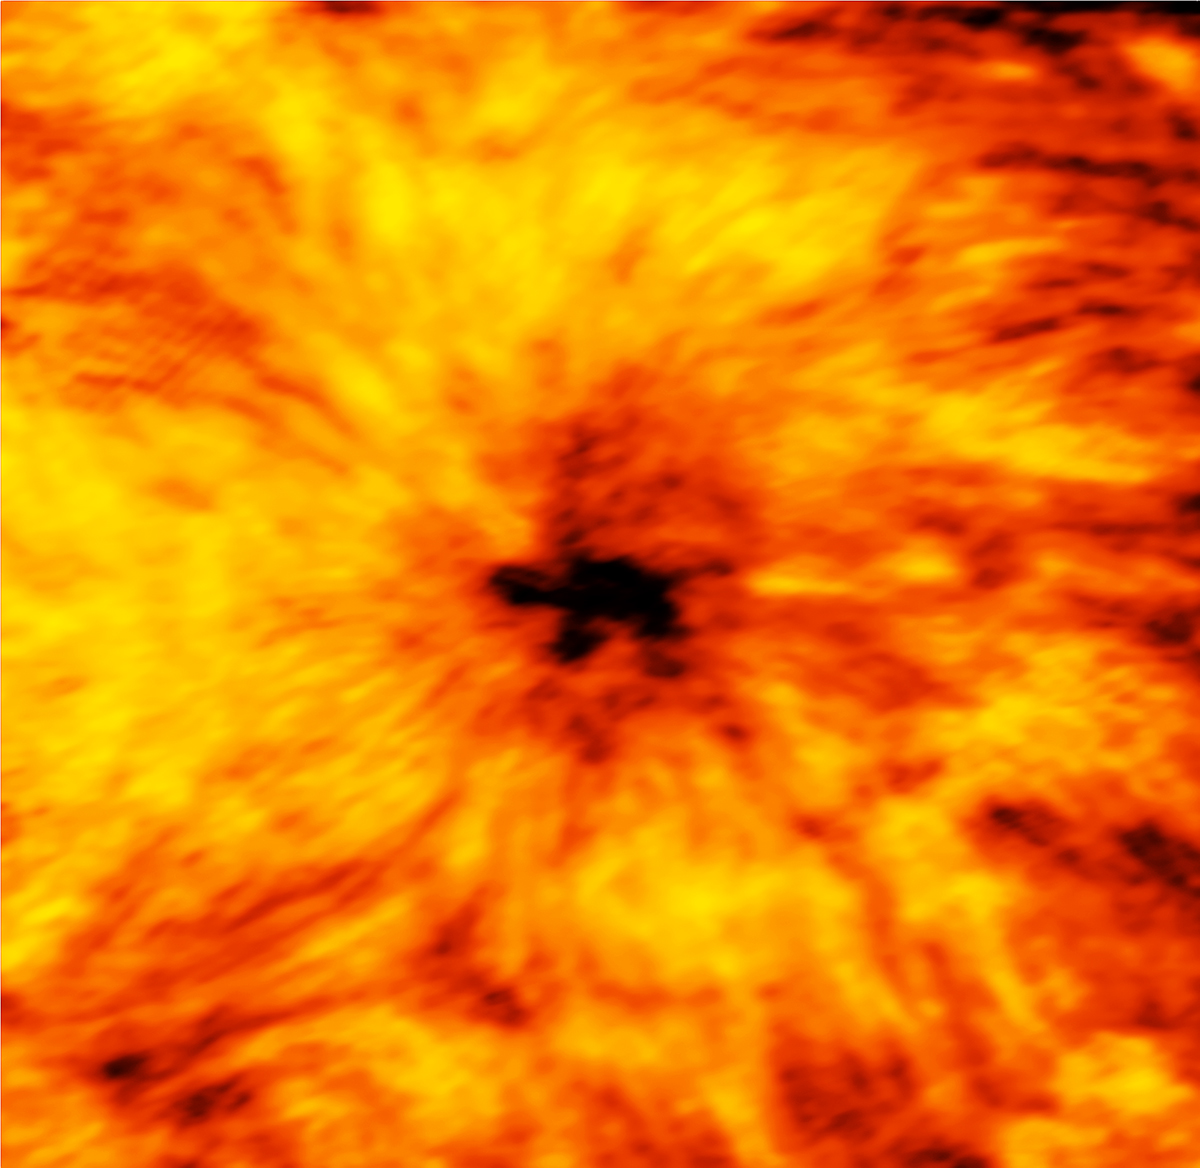 ALMA image of sunspot